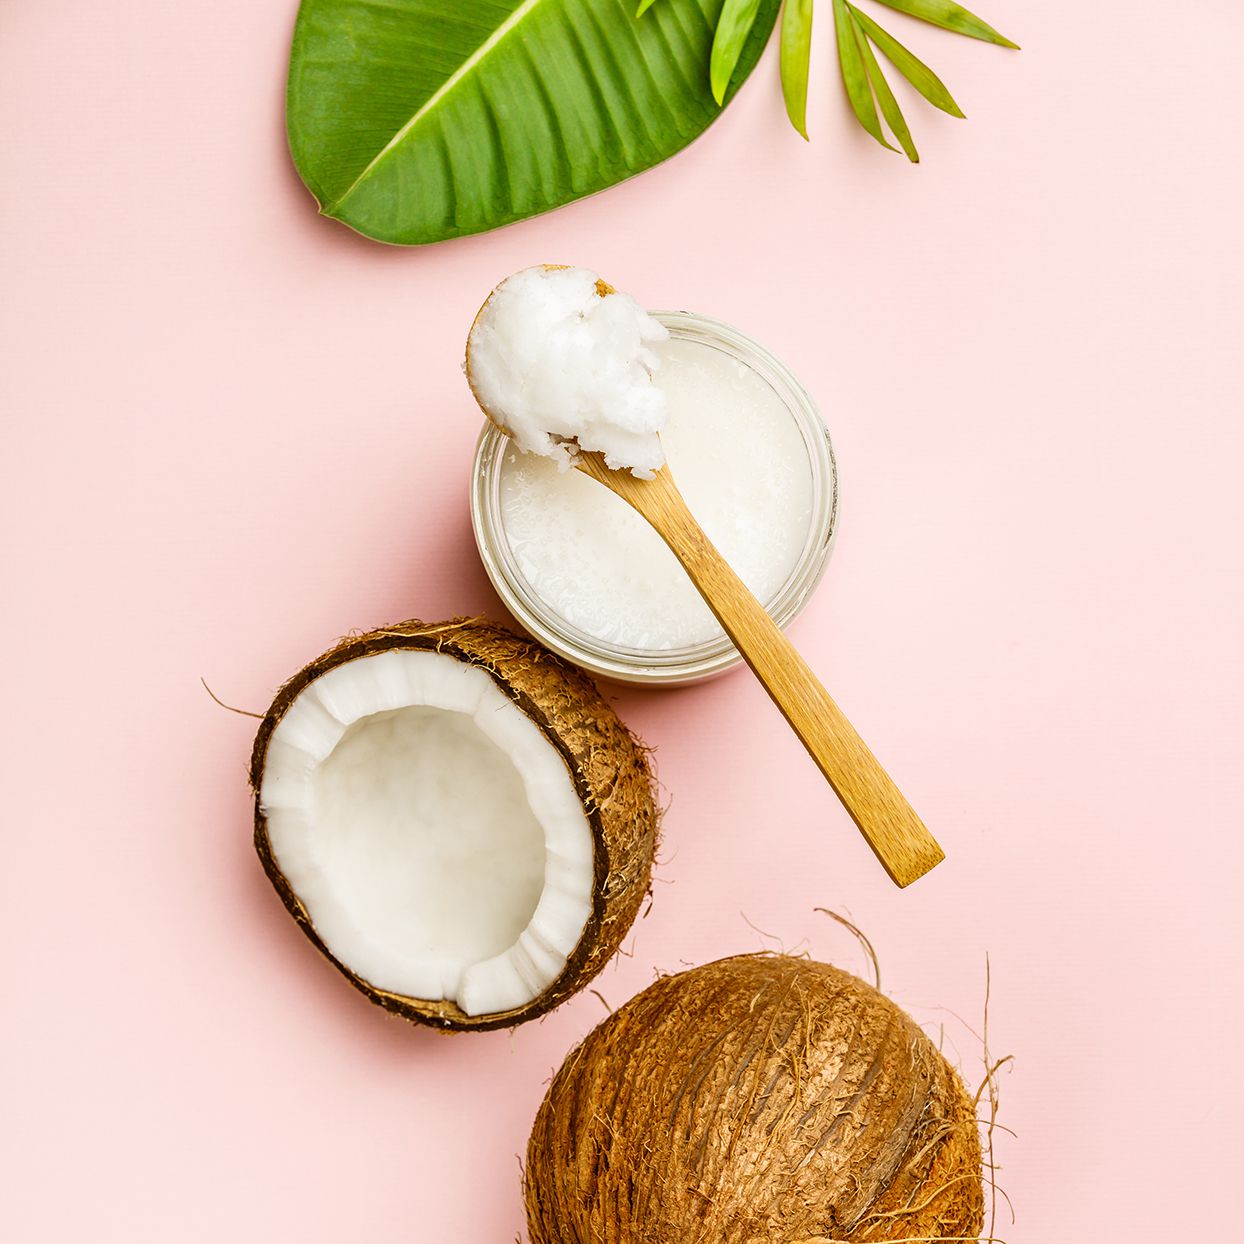 coconut hair oil benefits